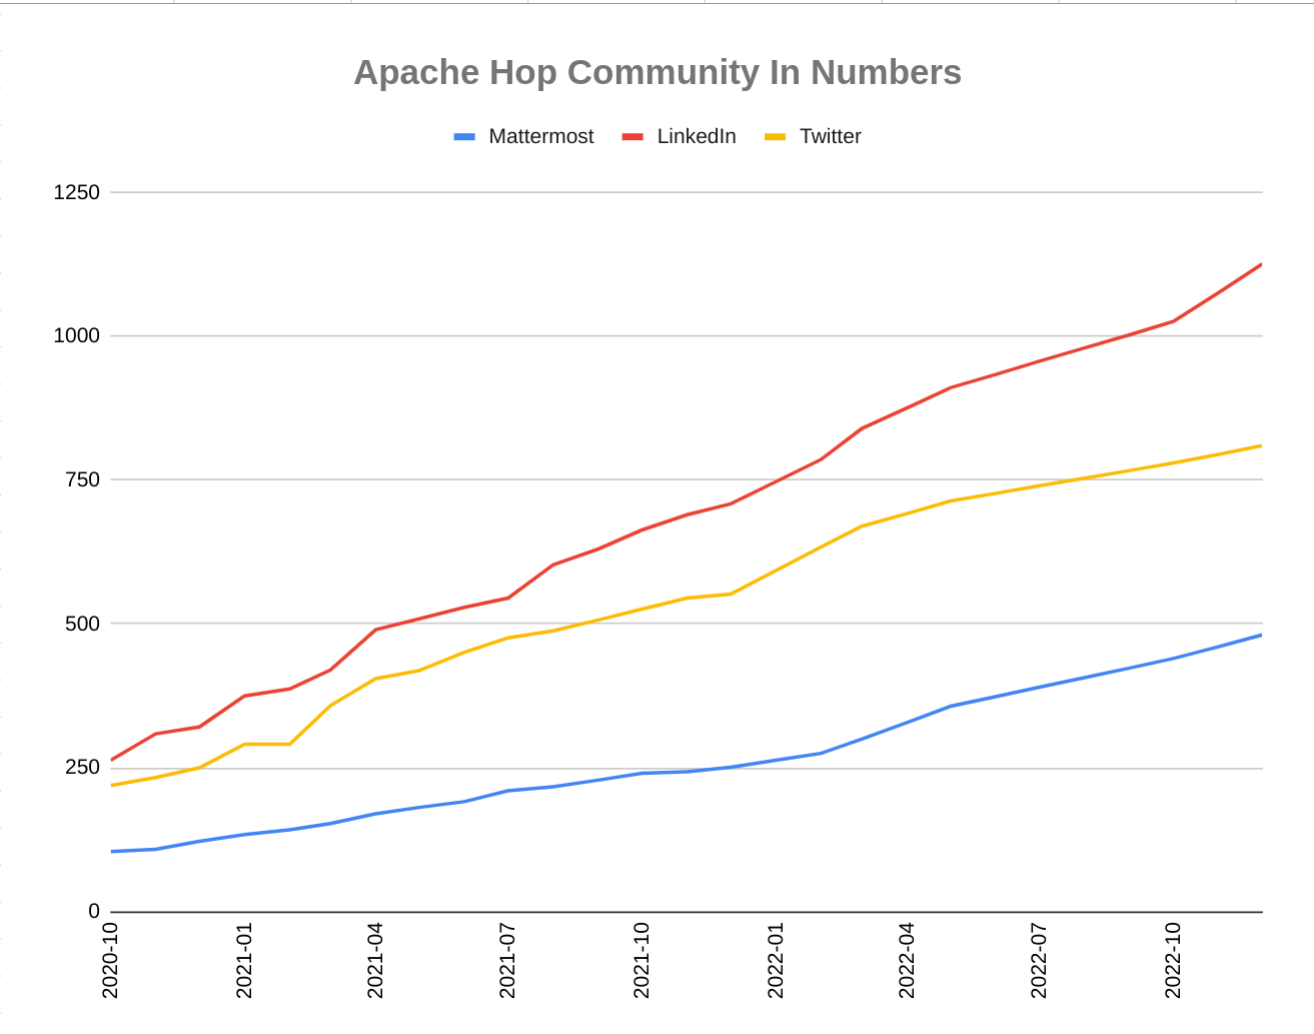 Apache Hop Community Growth